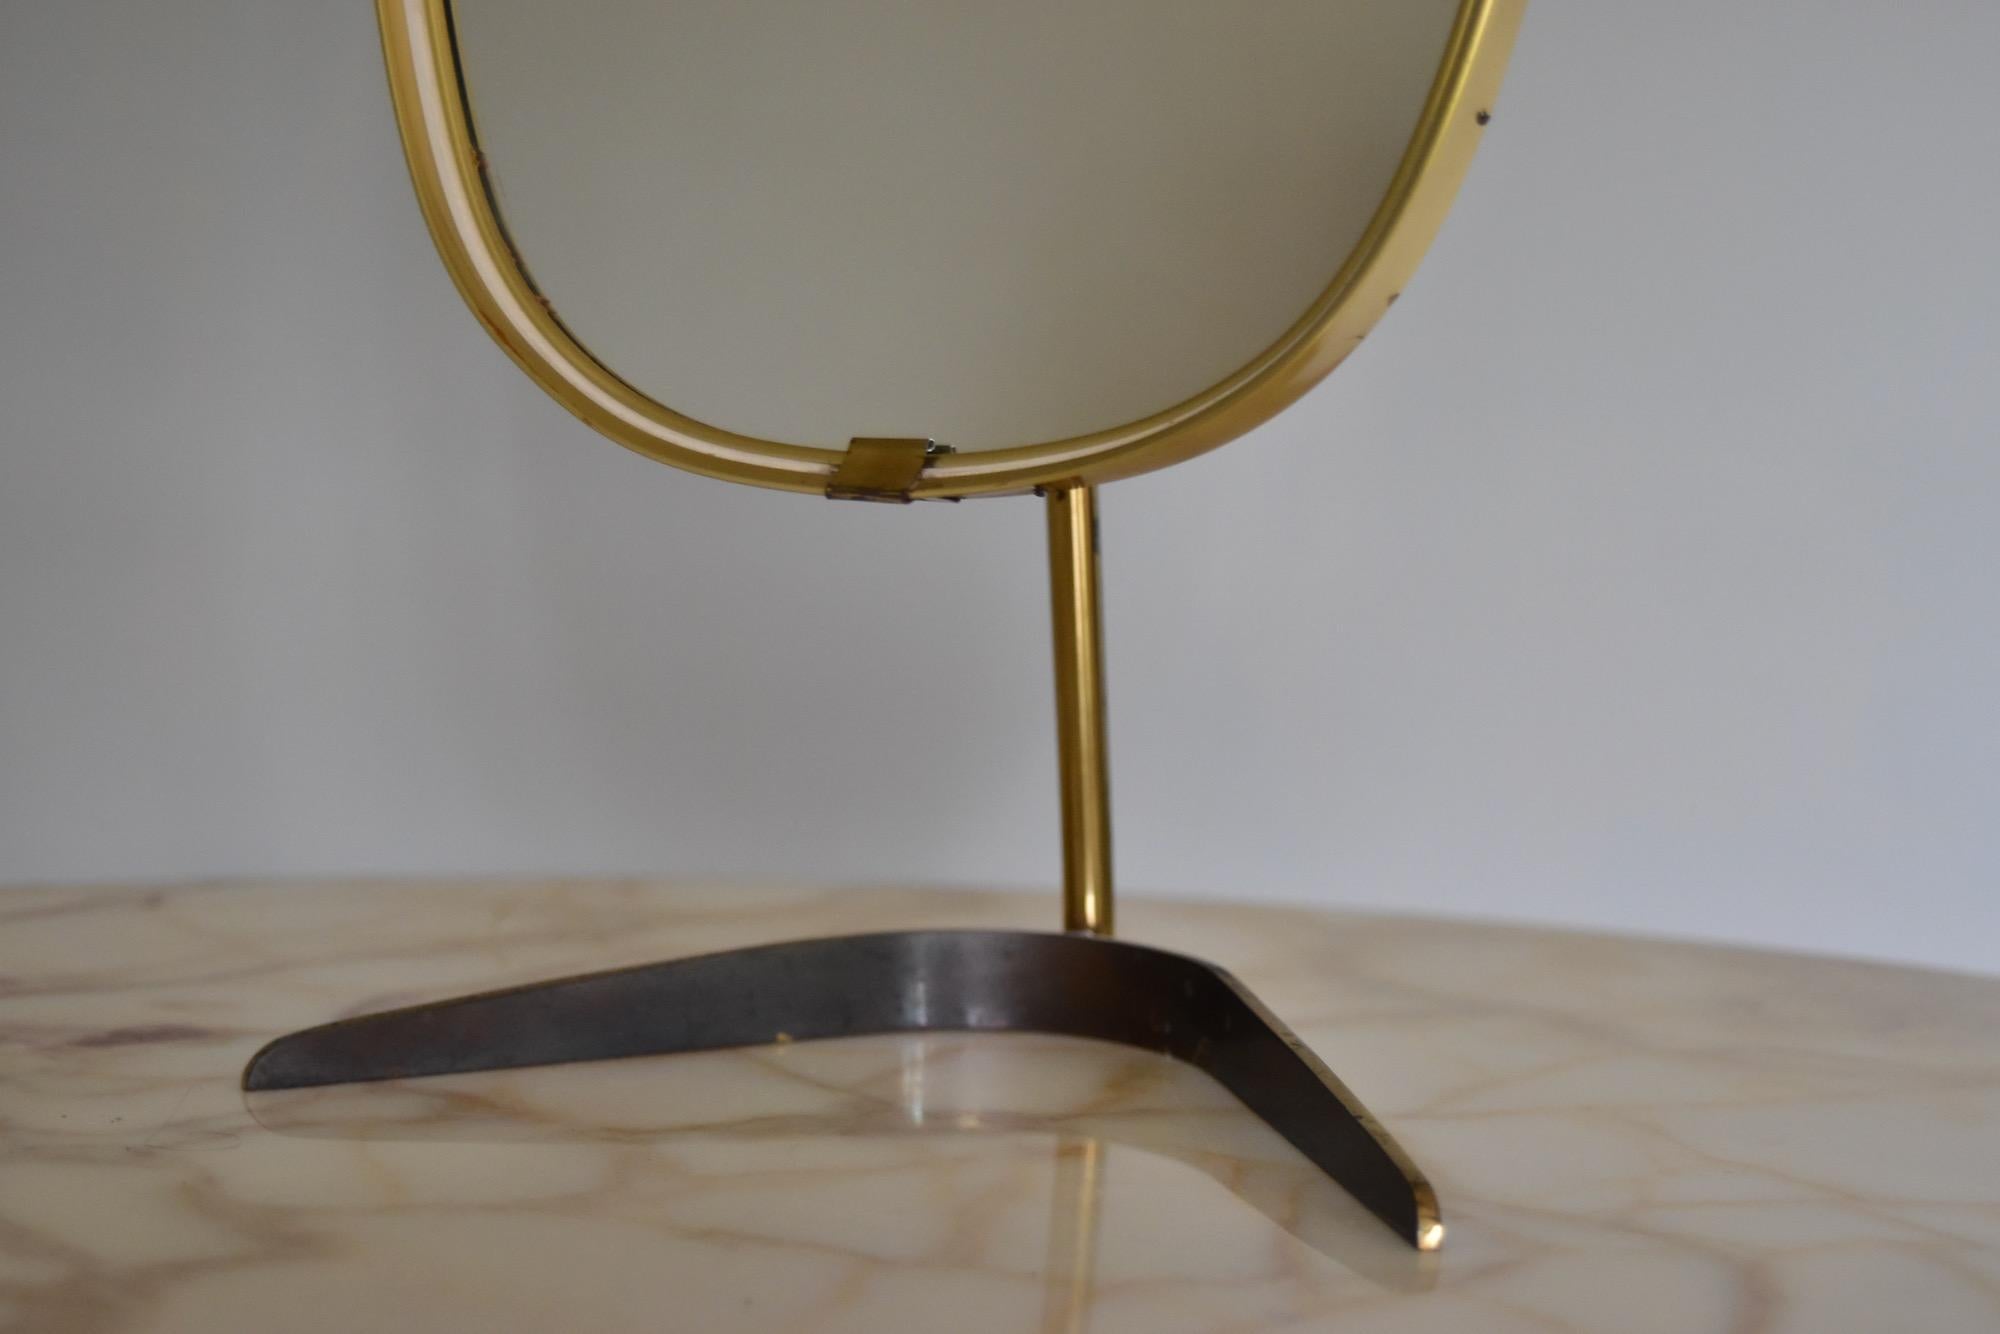 Vereinigte Werkstätten brass Mid-Century Modern table mirror.
Price for the table mirror, we have also the wall mirror in stock. 
   